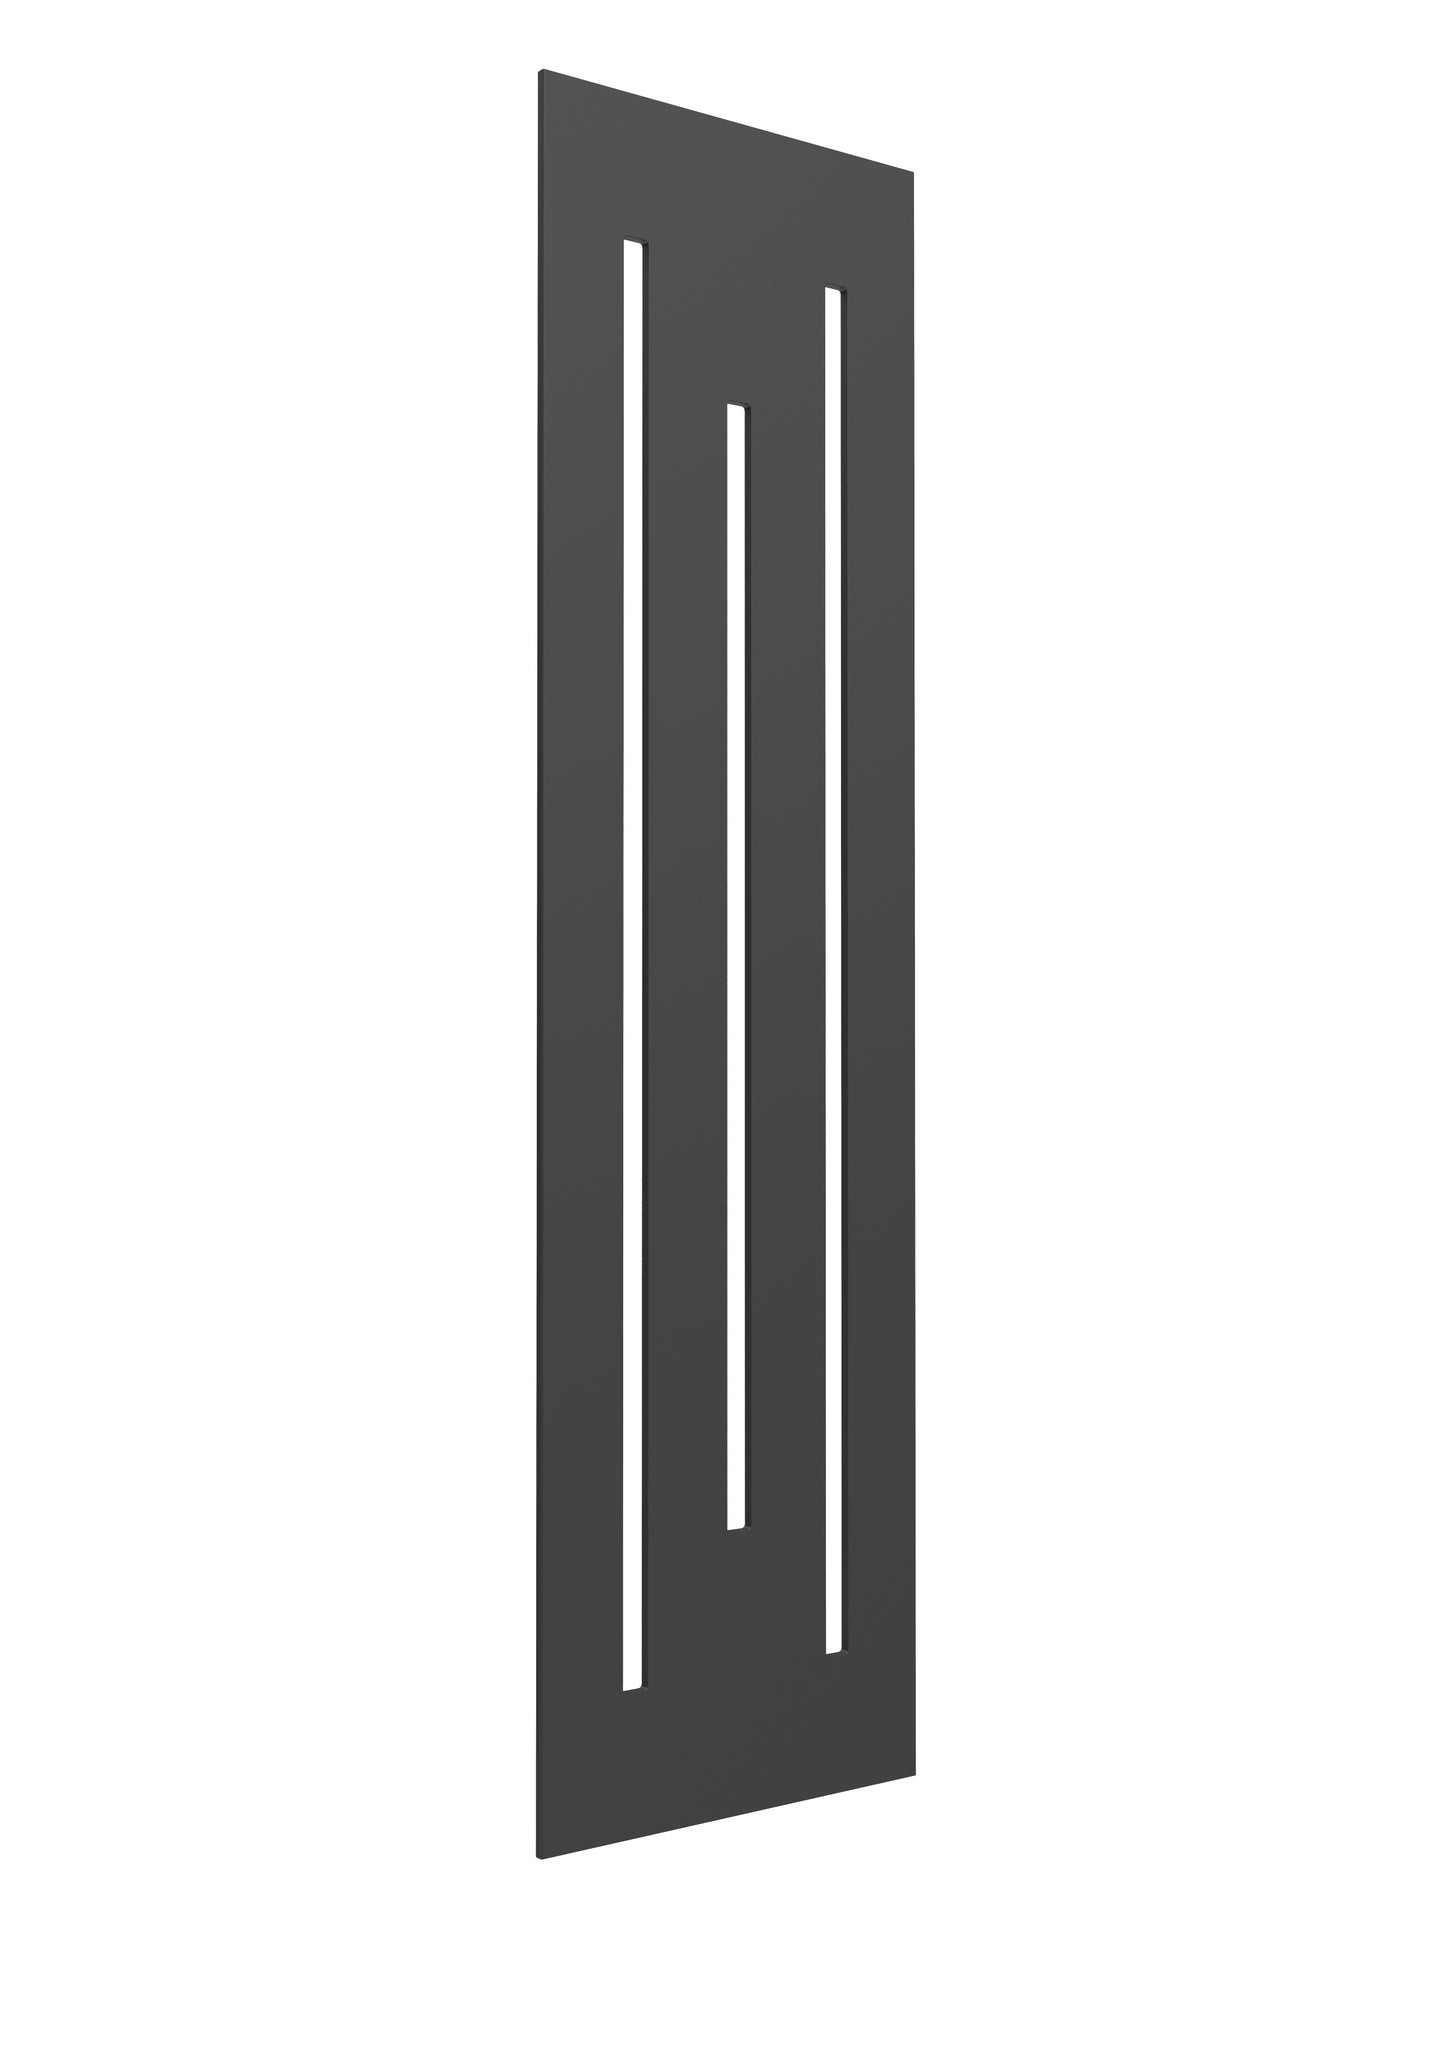 Line Vertical Designer Radiator - 1800mm x 490mm - Anthracite